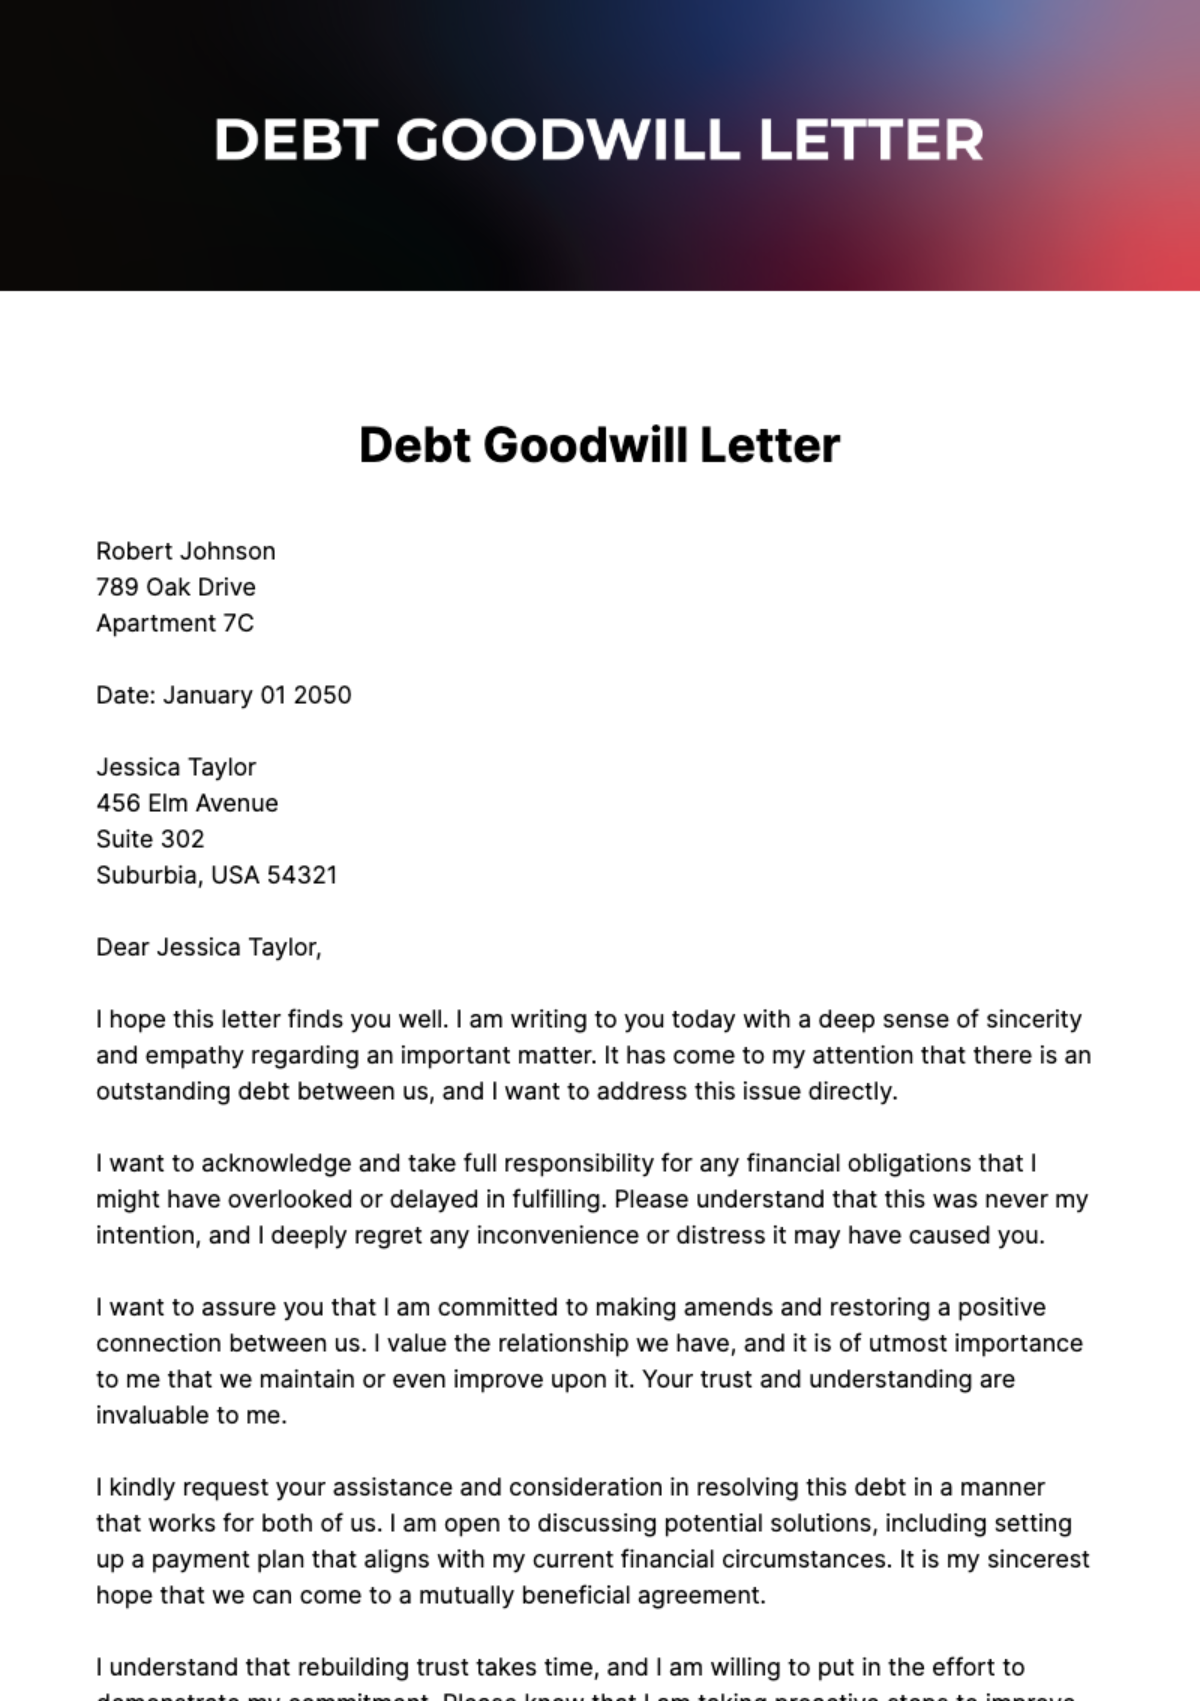 Free Debt Goodwill Letter Template